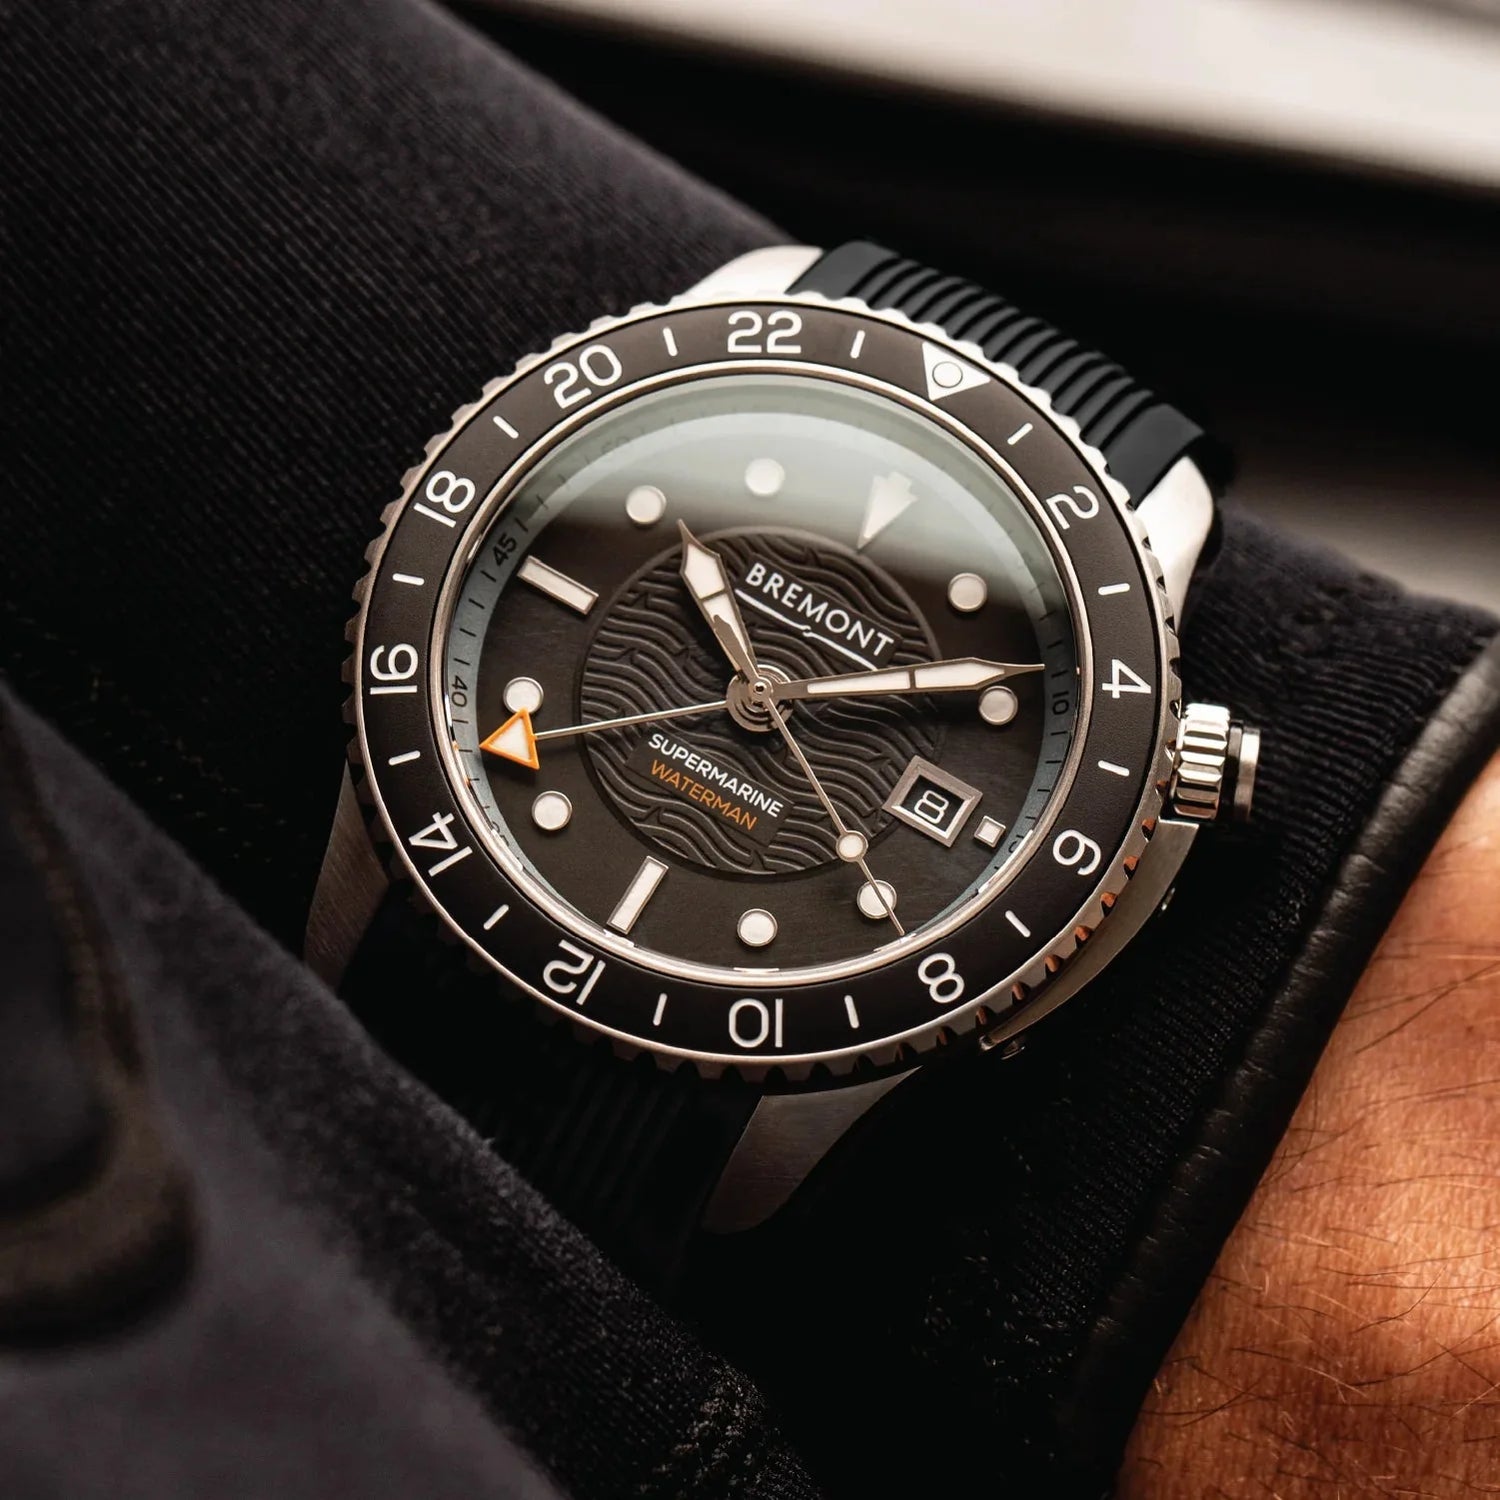 Bremont Watch Company Watches | Mens | Supermarine Waterman Apex II [Black Rubber]